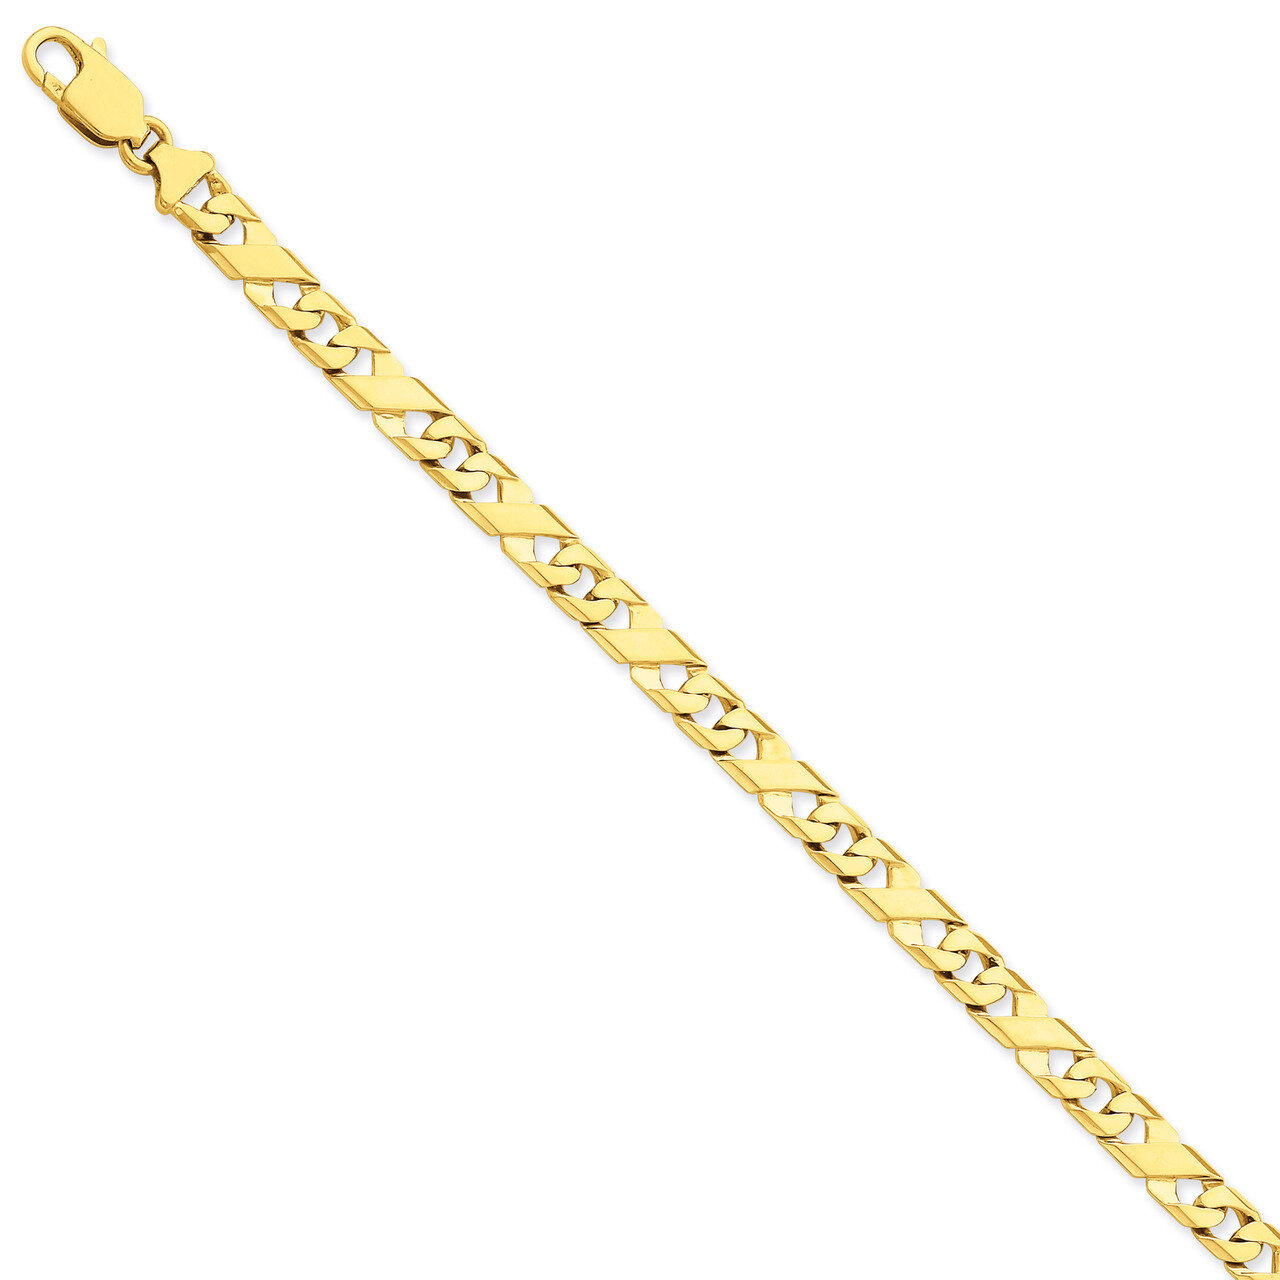 7mm Hand-Polished Fancy Link Chain 9 Inch 14k Gold LK165-9